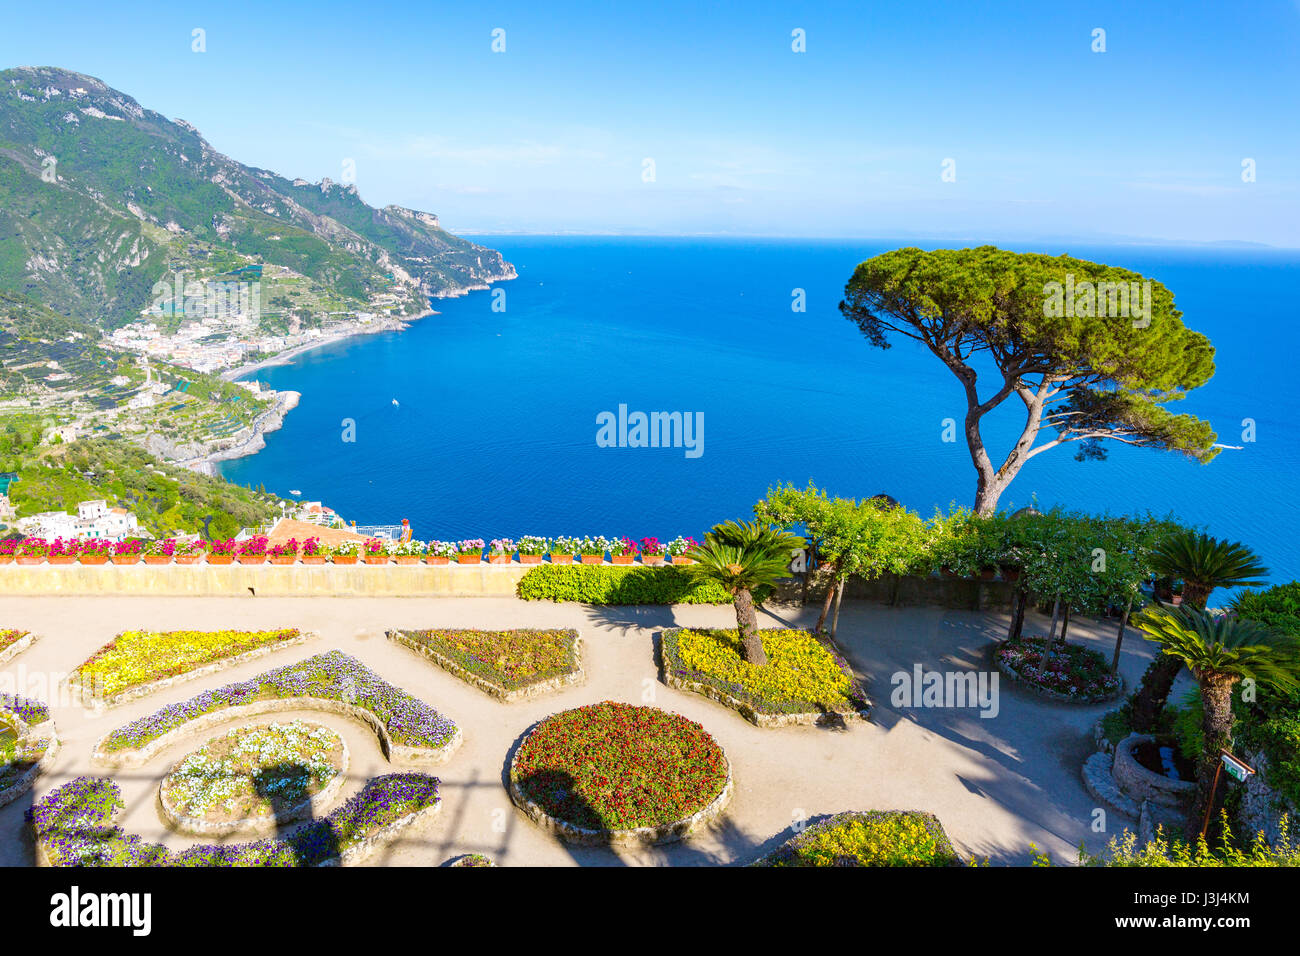 Ravello, view of the Amalfi Coast from a Villa Rufolo Terrace Stock Photo